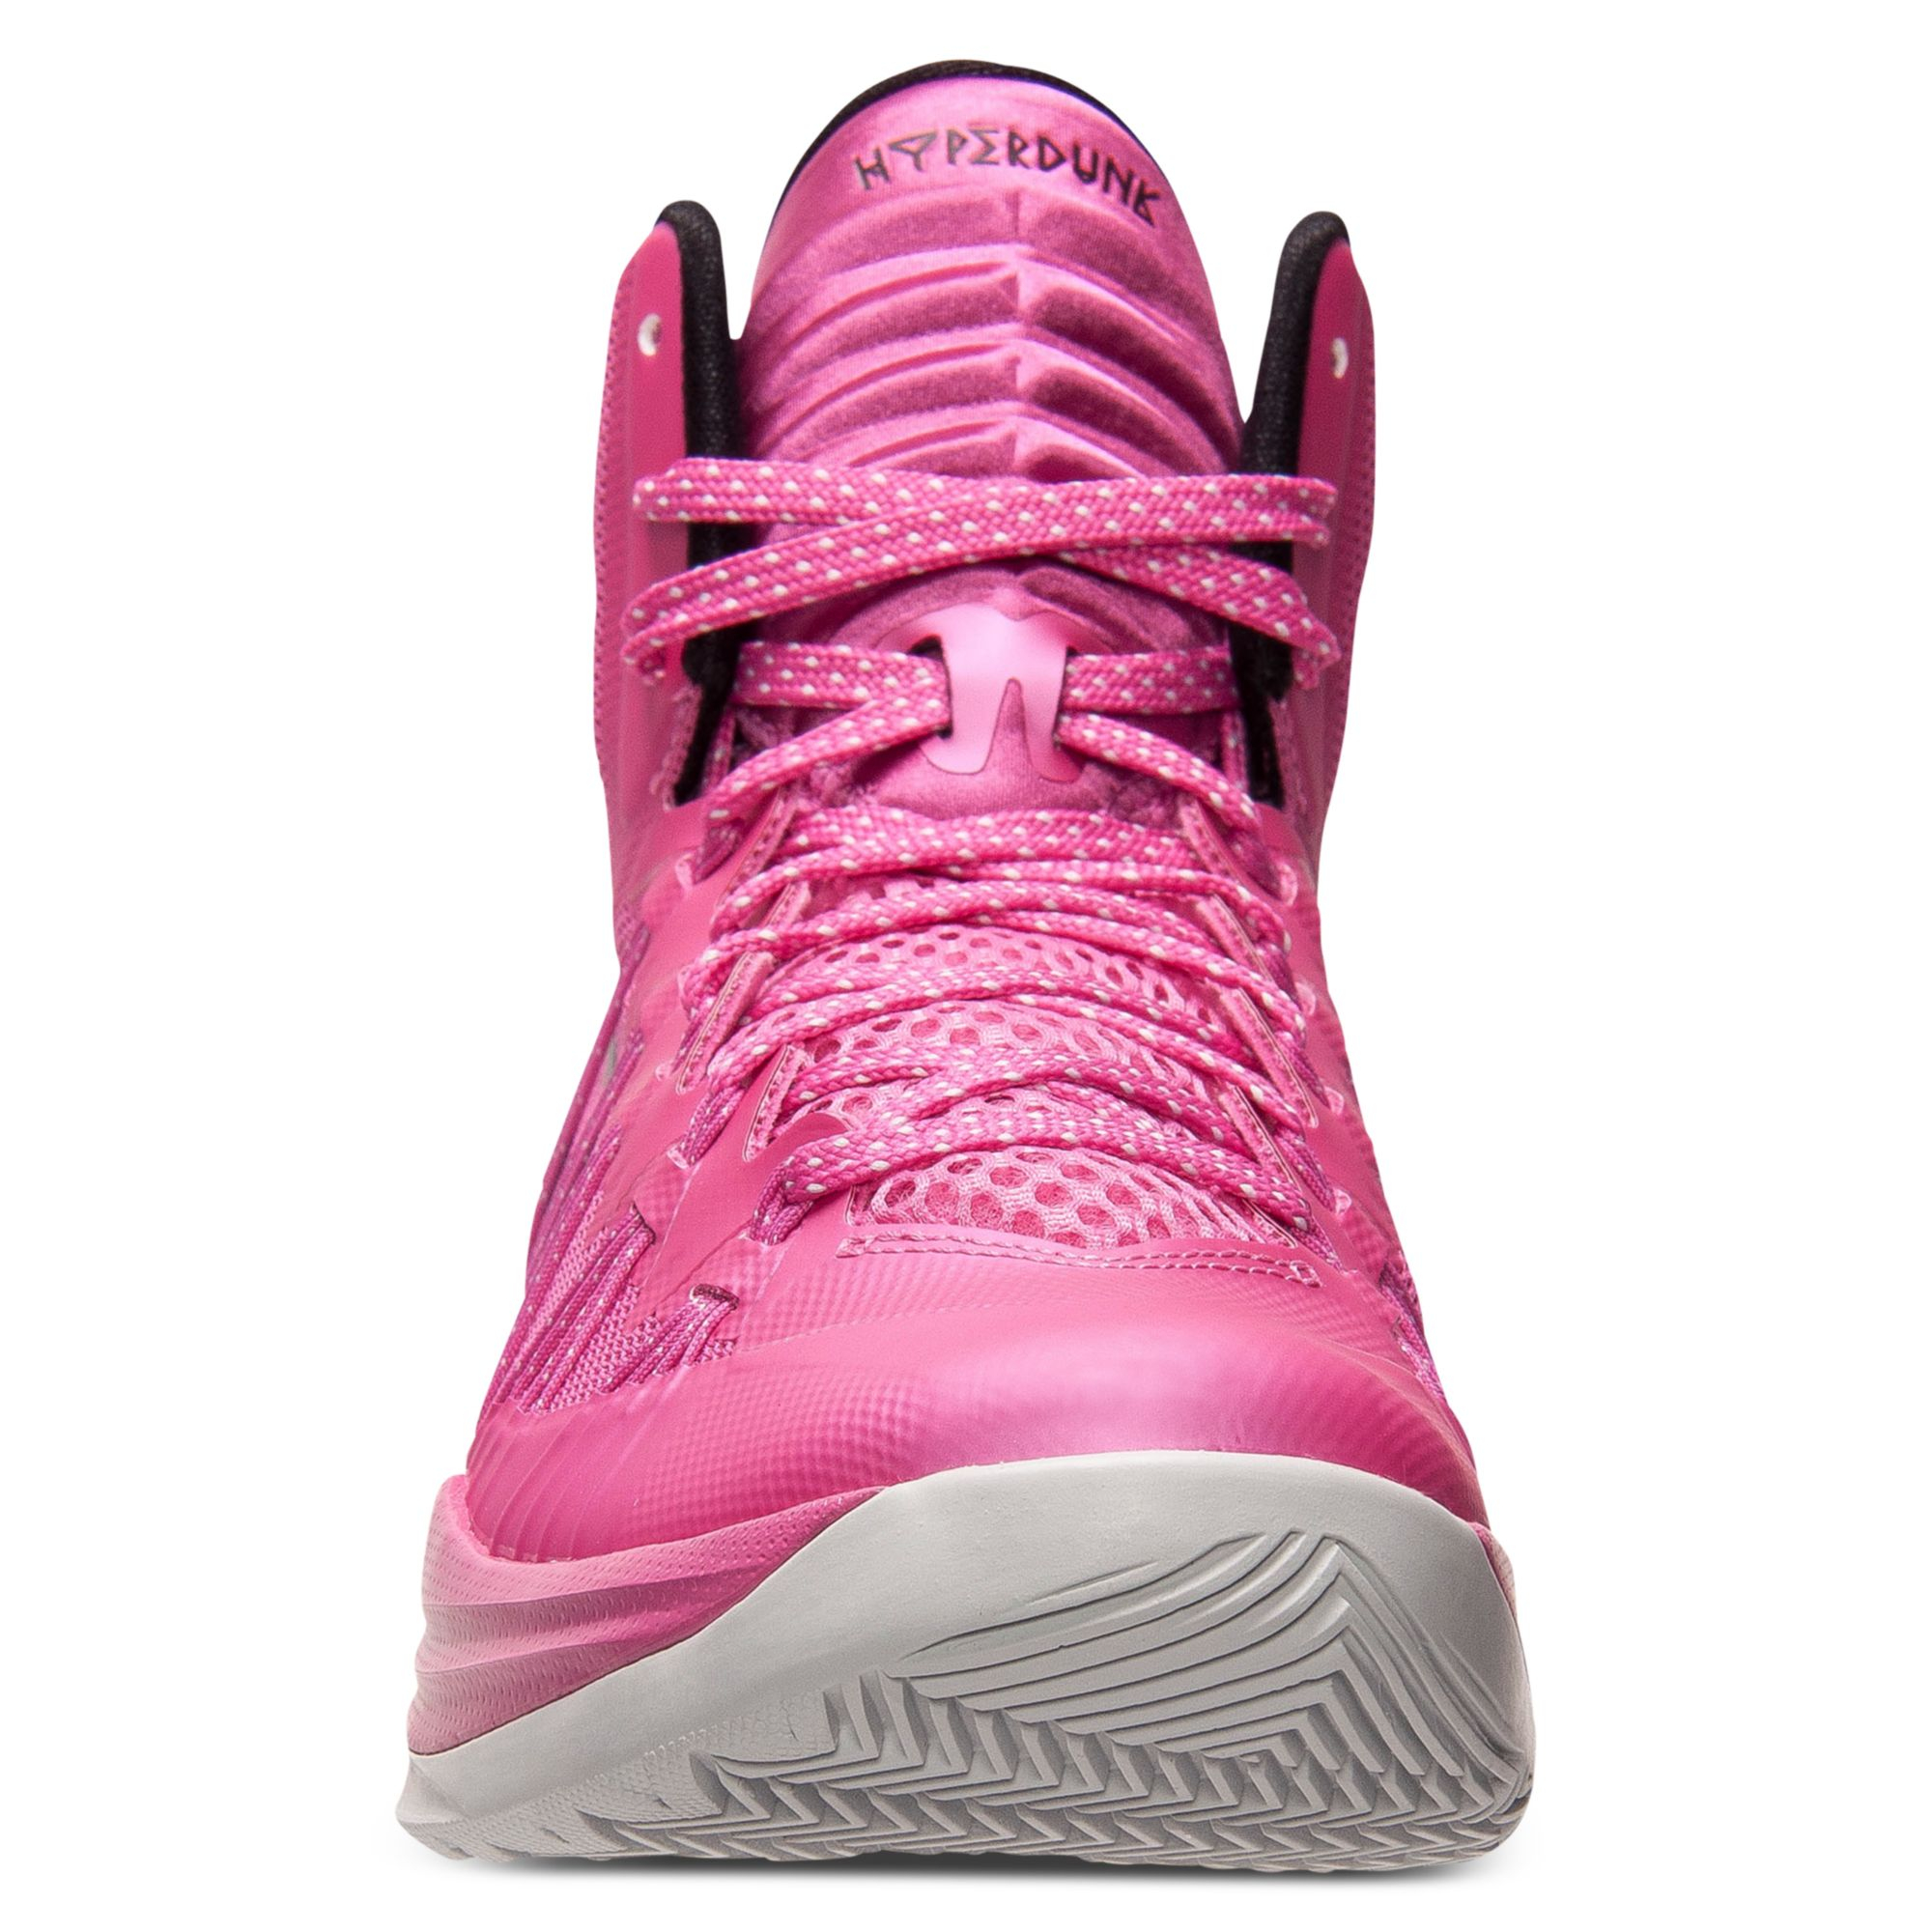 Nike Hyperdunk Basketball Sneakers in Pink/Metallic Silver